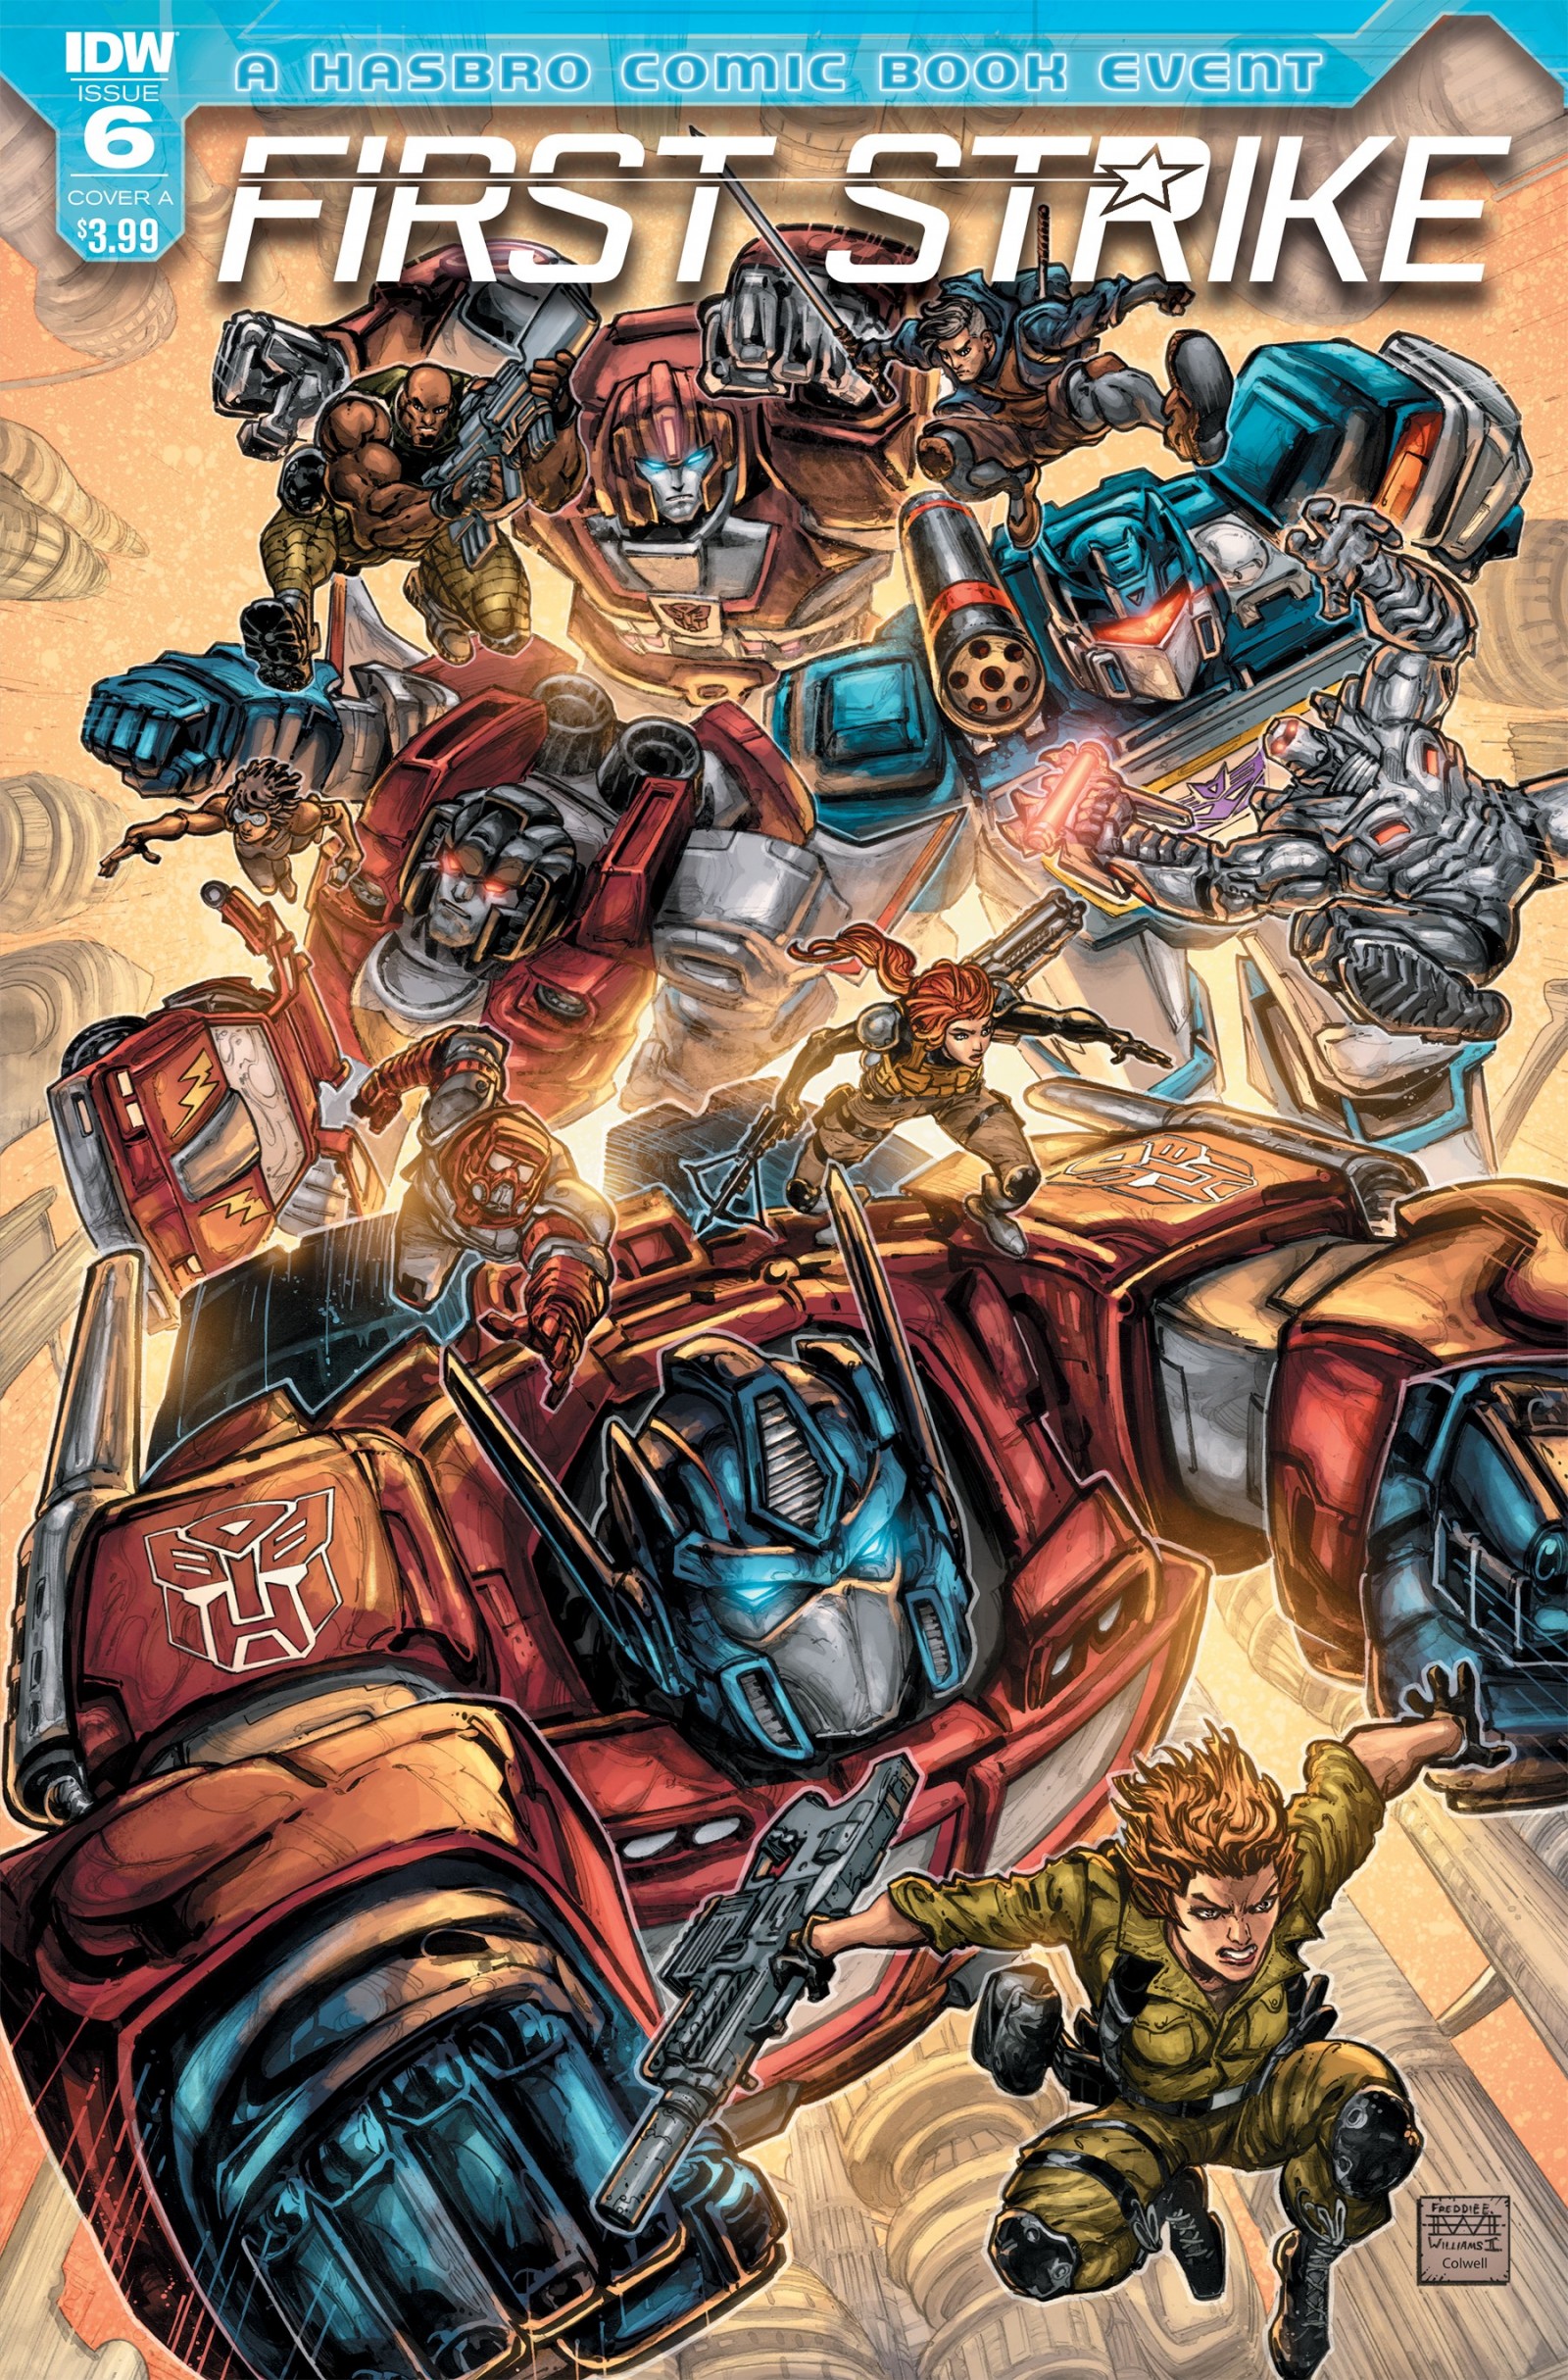 Transformers Prime (Jack x Arcee) - Chapter 14 - Wattpad